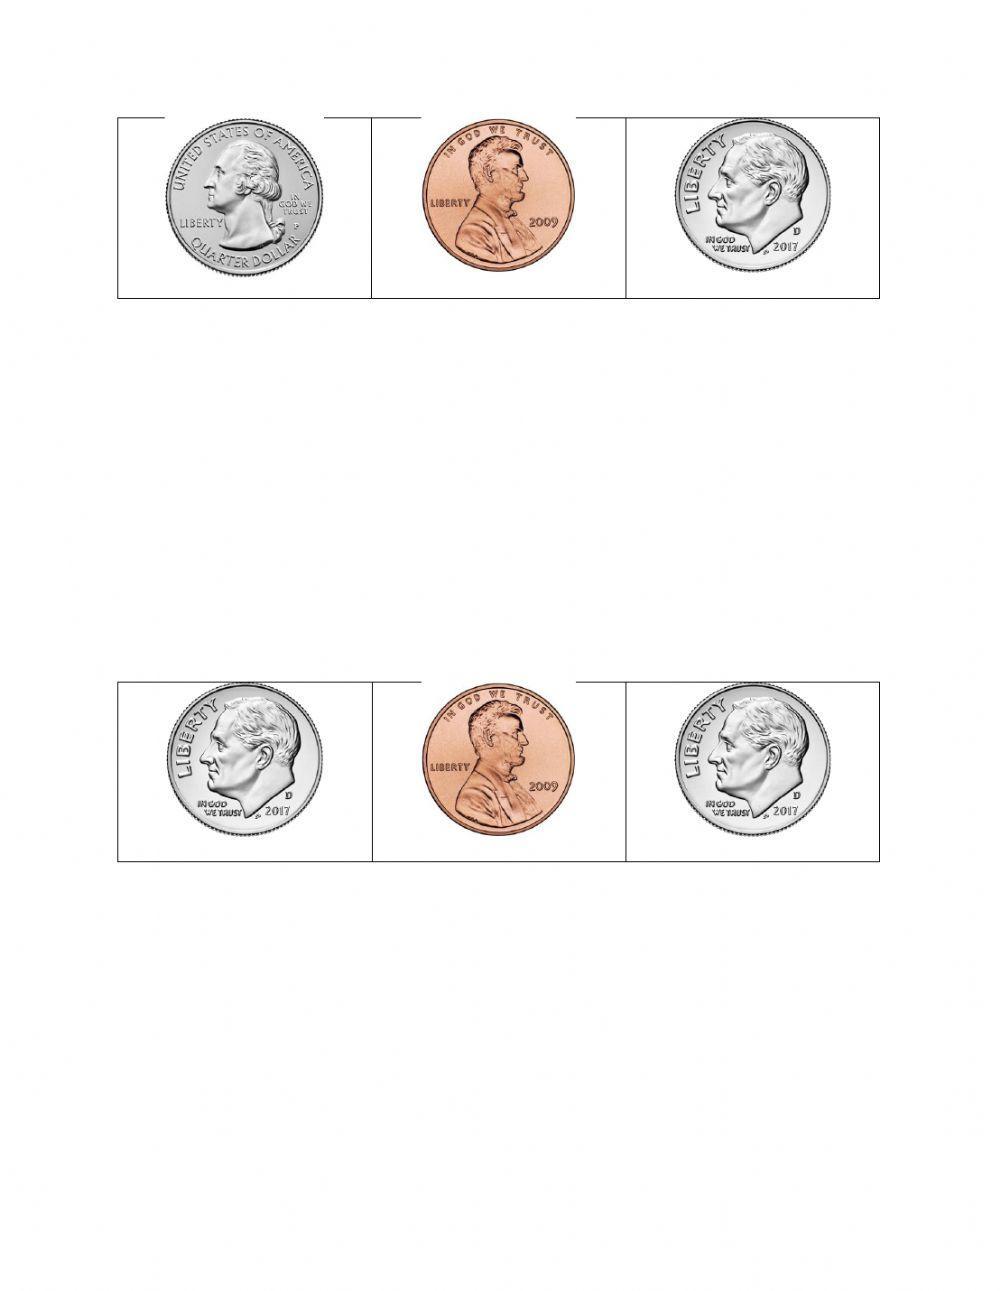 Identification of Penny